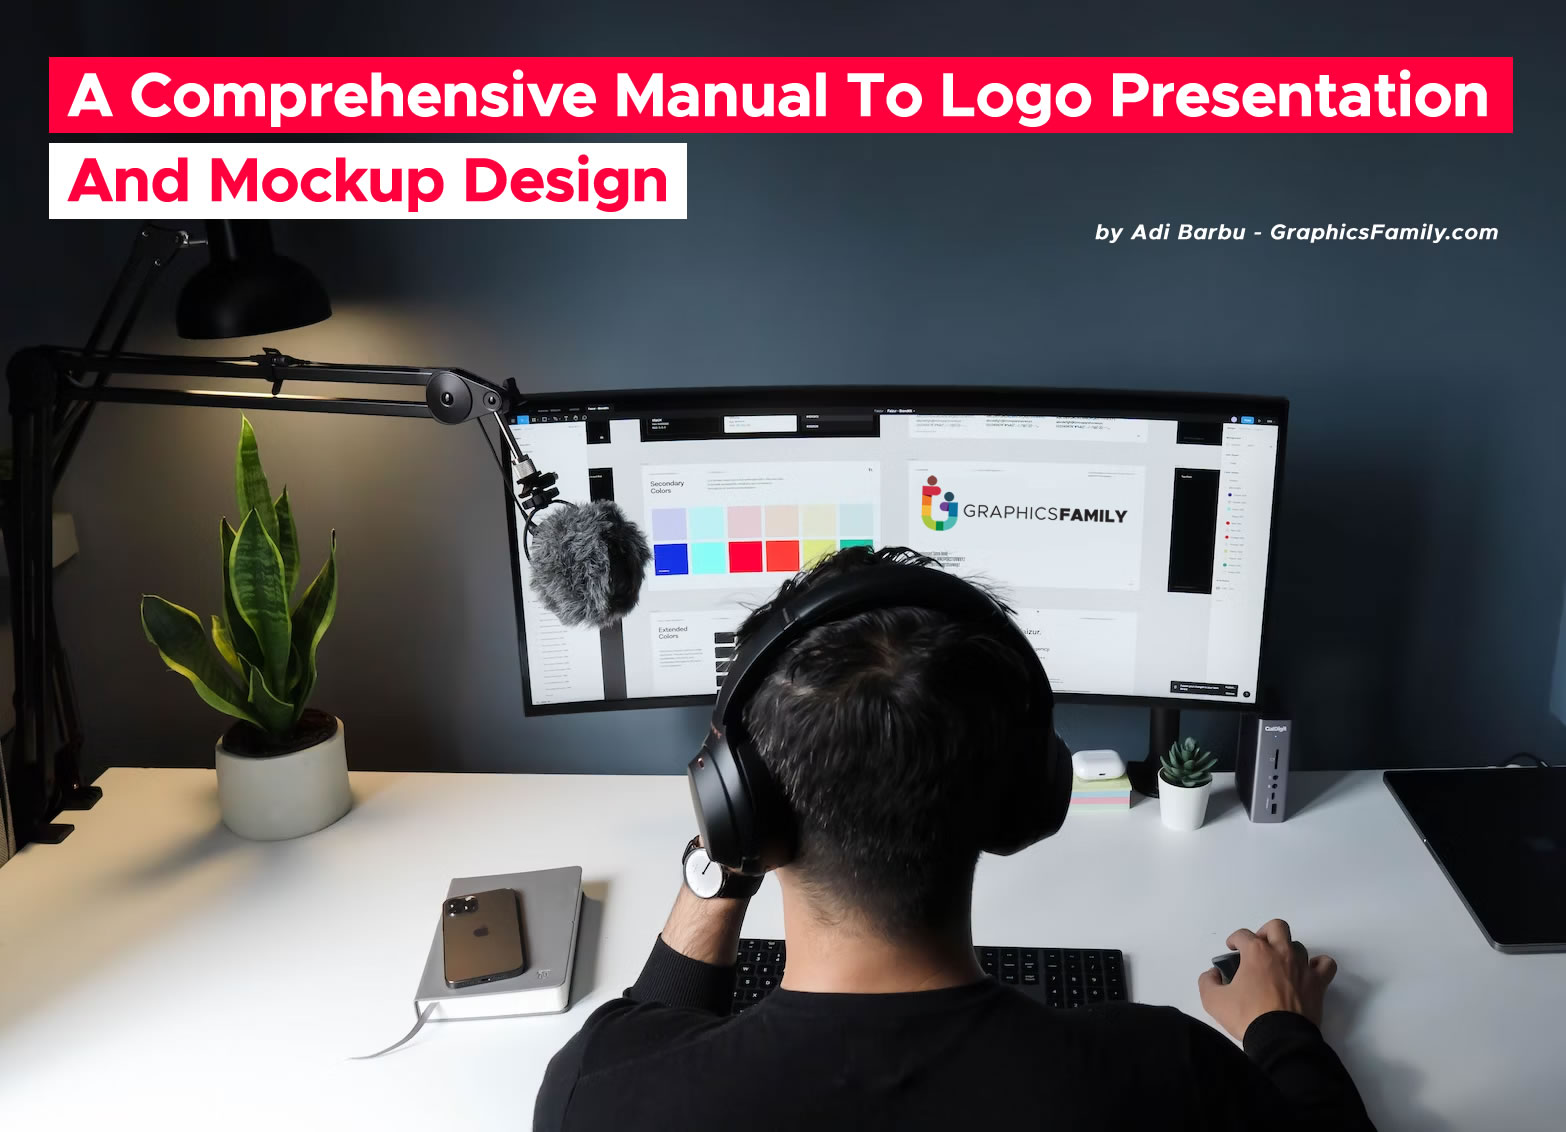 A Comprehensive Manual To Logo Presentation And Mockup Design